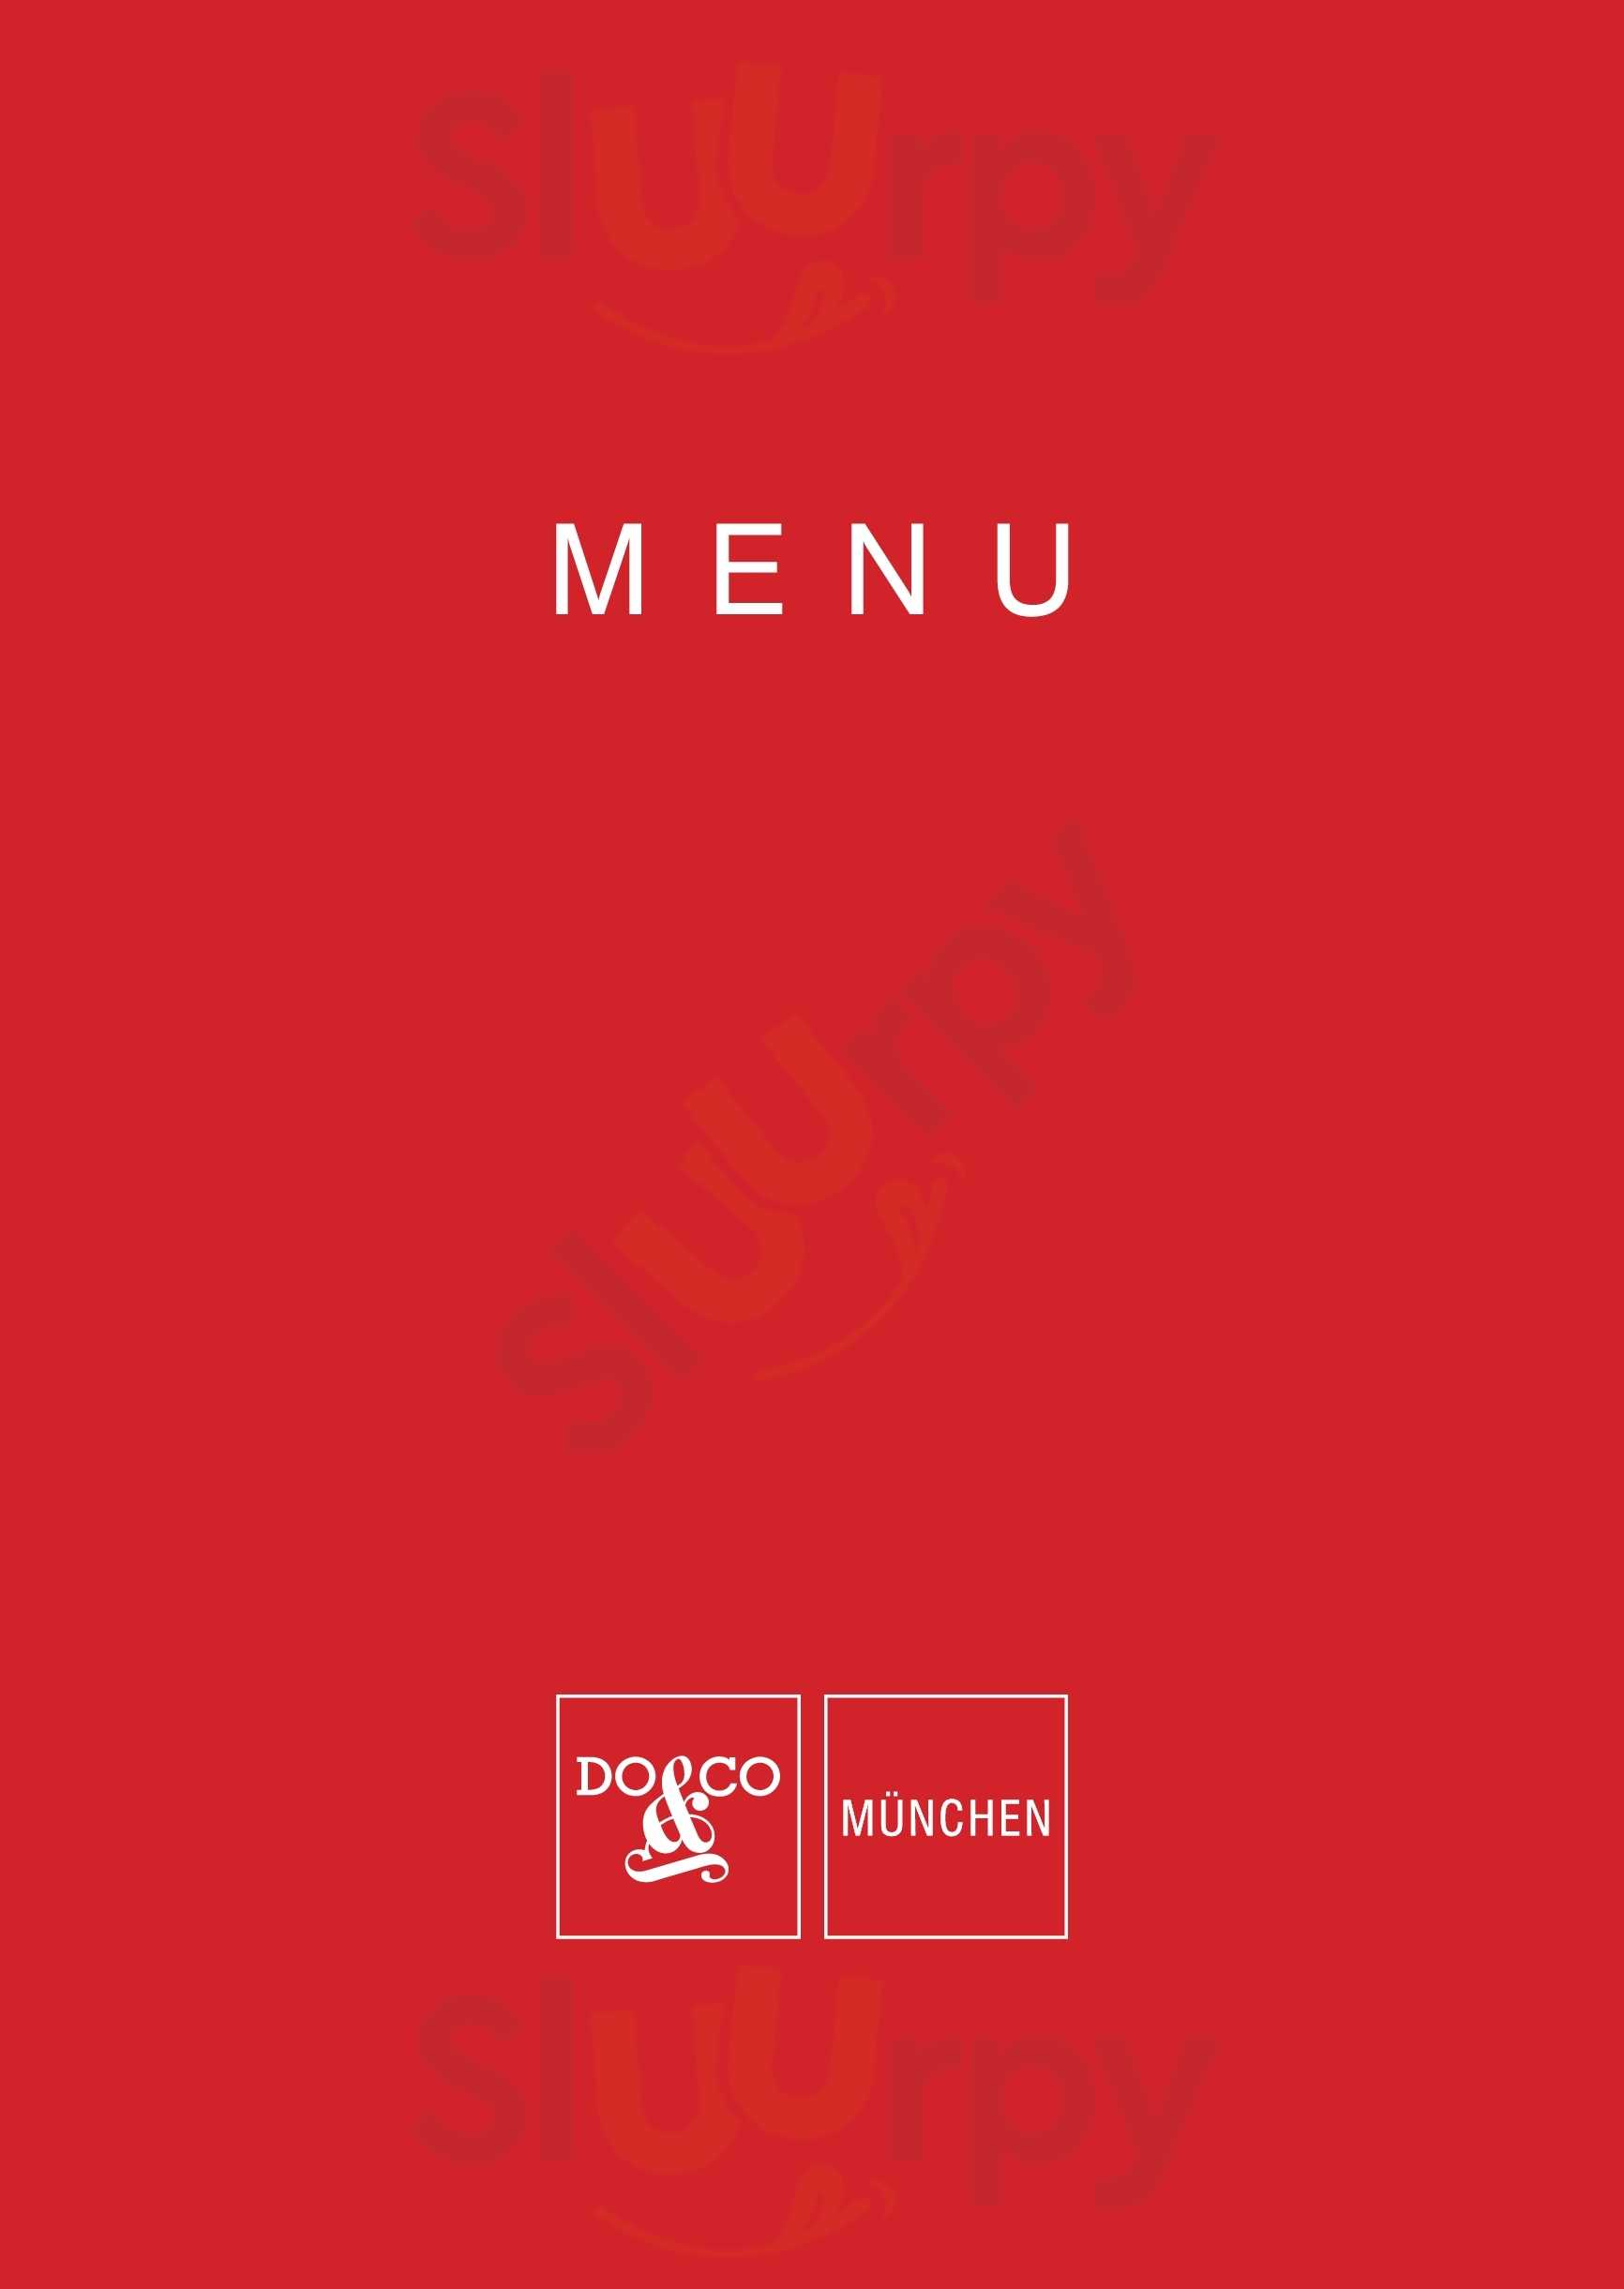 Do & Co Restaurant München Menu - 1